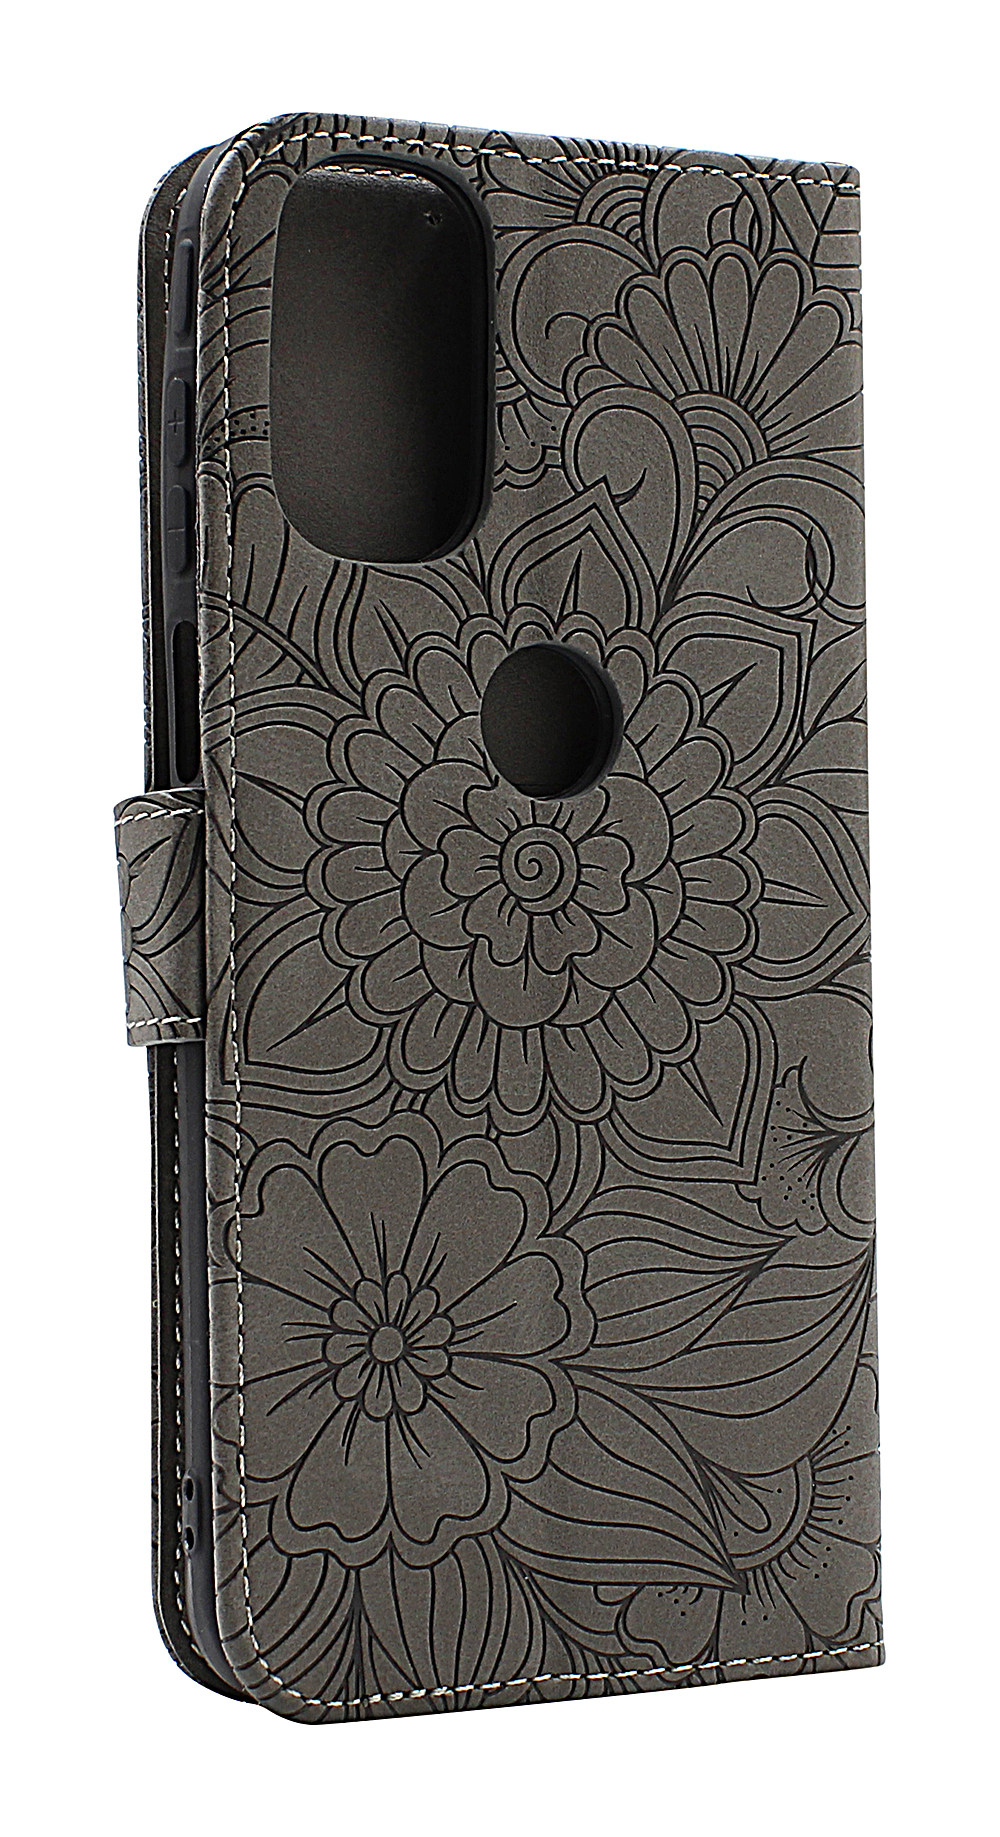 Flower Standcase Wallet Motorola Moto G31/G41